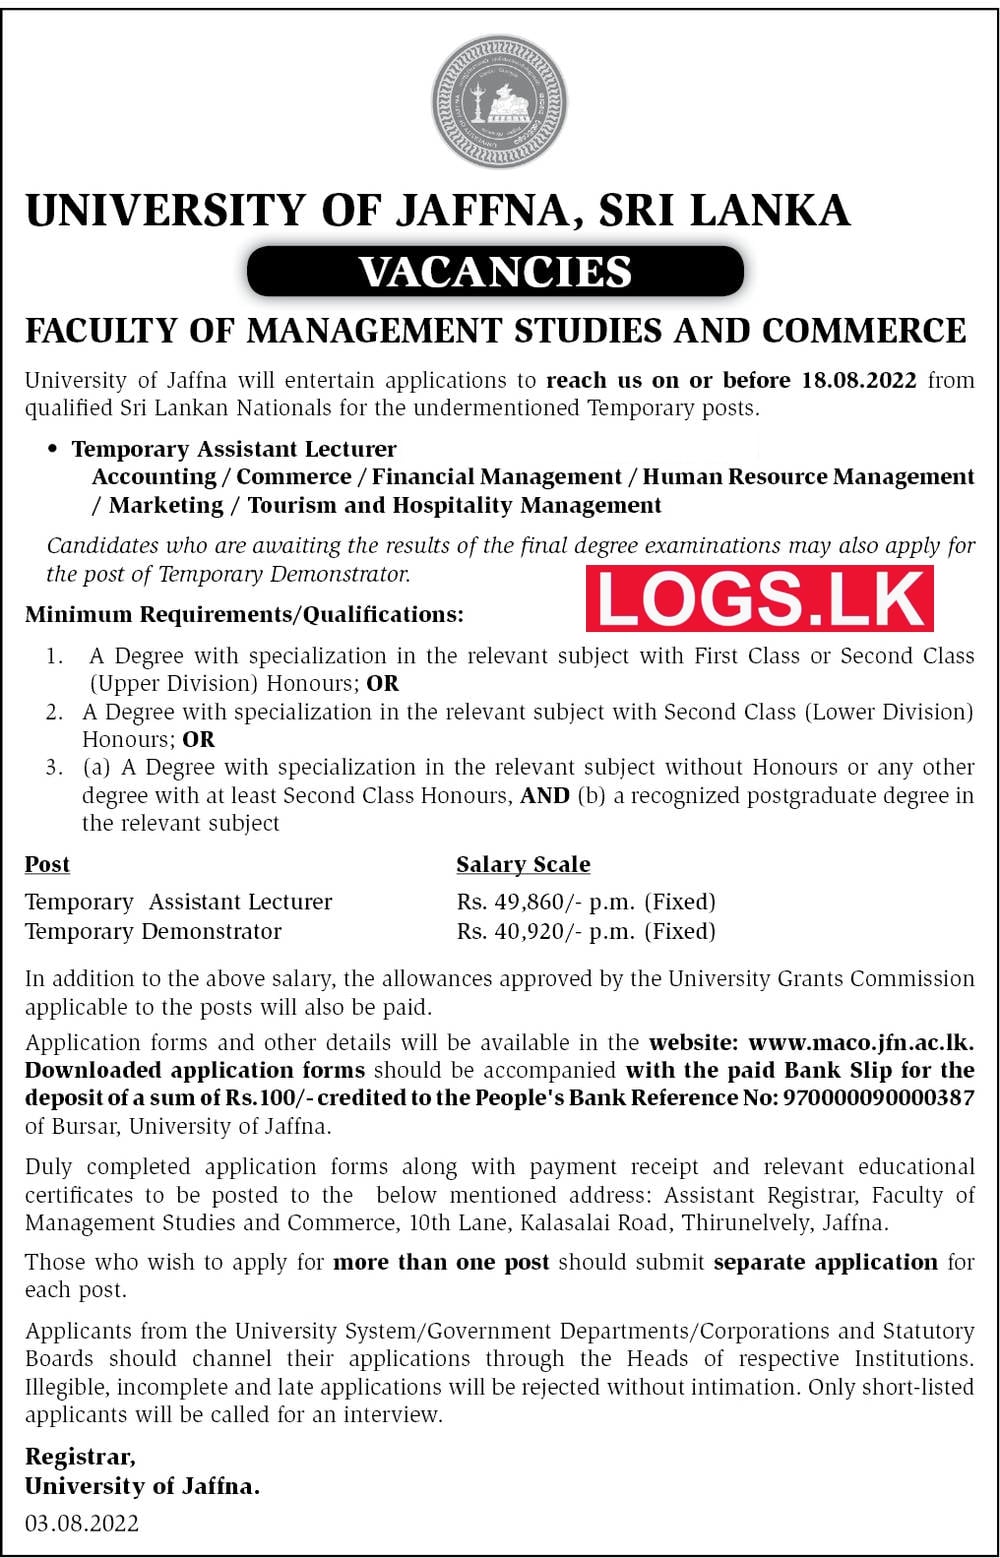 Temporary Assistant Lecturer - University of Jaffna Vacancies 2022 Details, Application